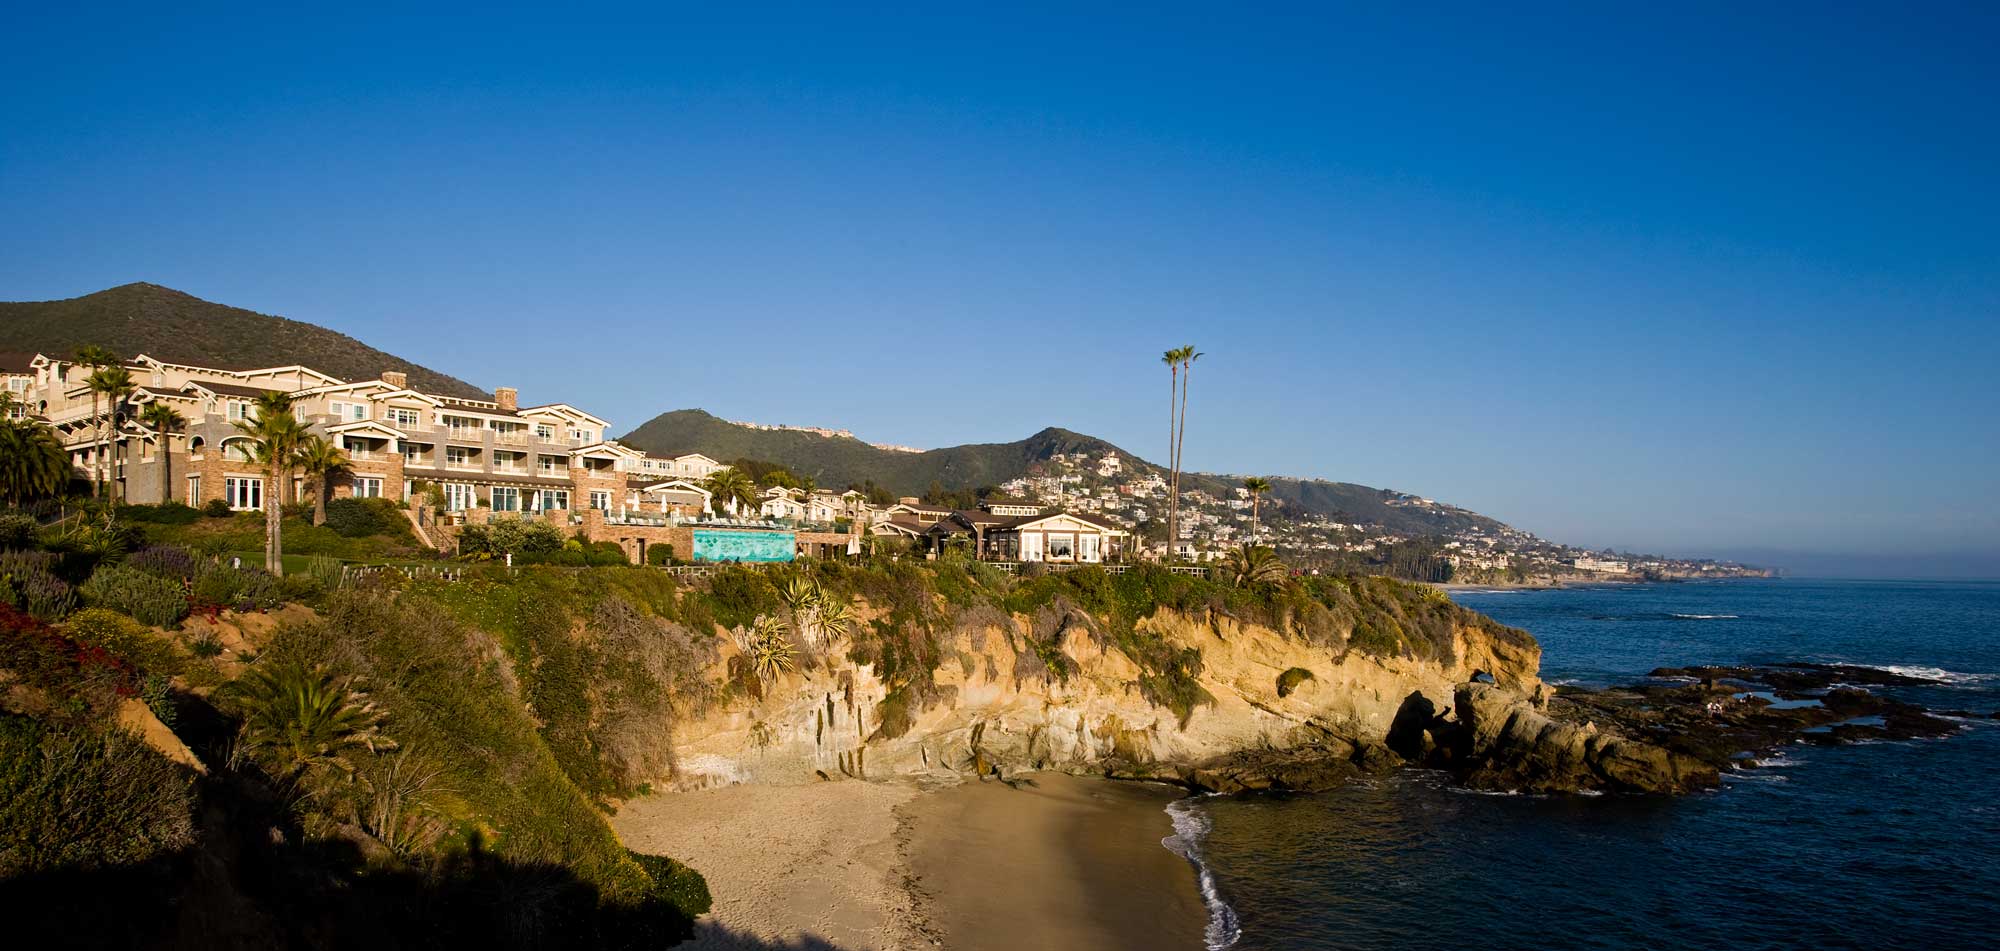 Best Beach Resorts for Romantic Getaways: Montage Laguna Beach